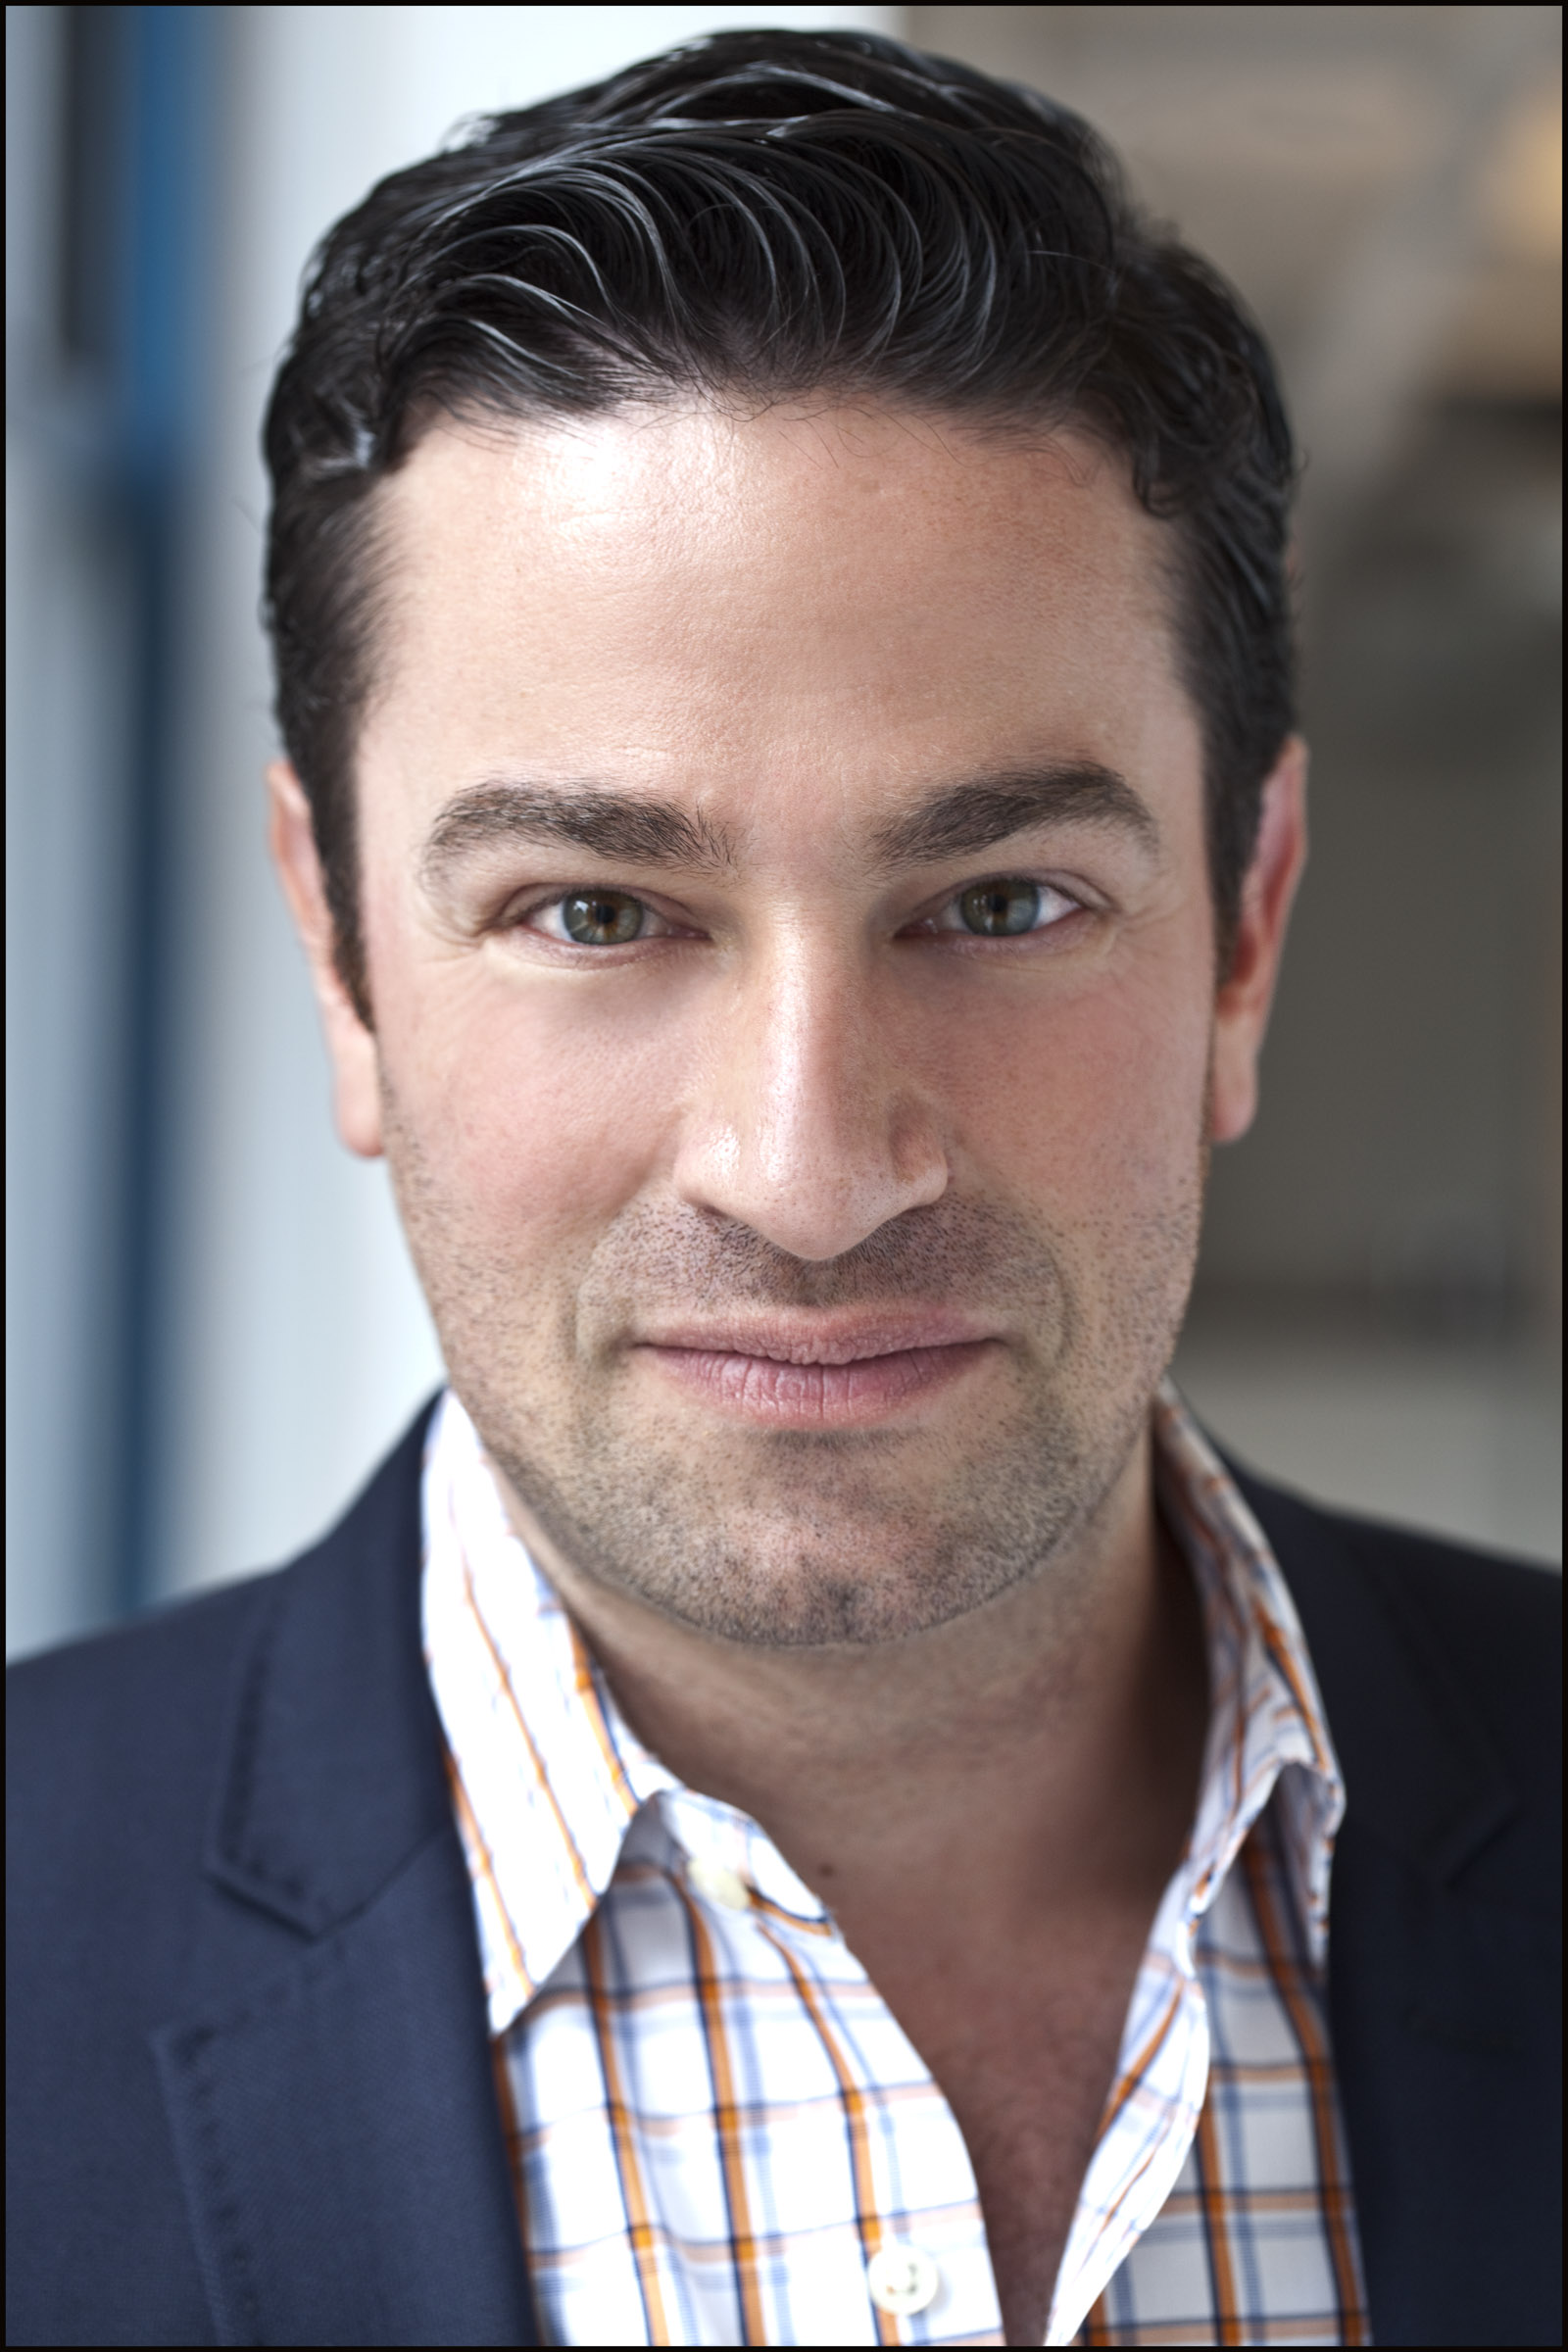 Mr. Silberman, Executive Portrait by Tess Steinkolk, NYC CEO Portrait and Headshot Photographer